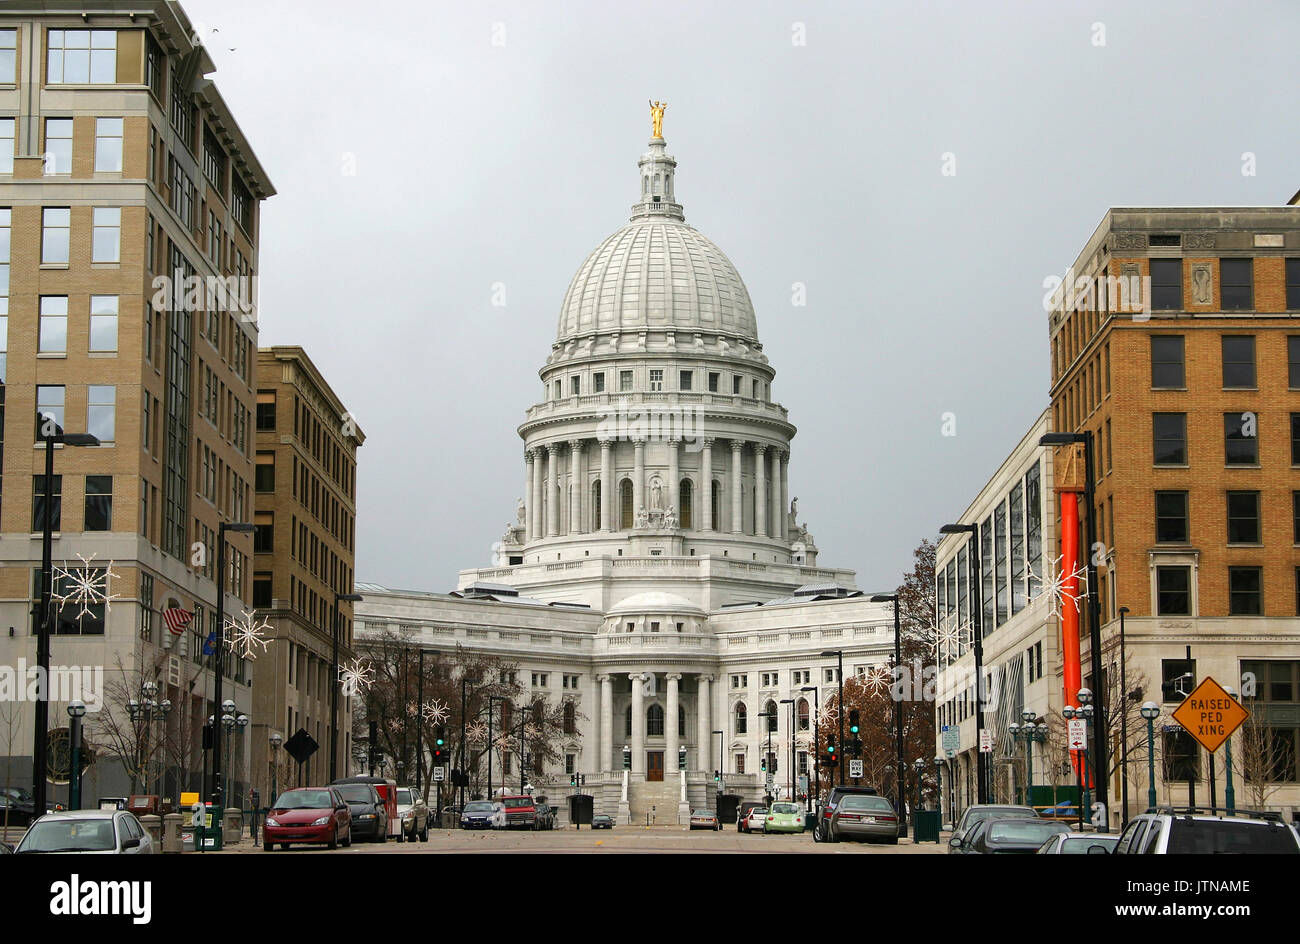 Wisconsin State Capitol building, National Historic Landmark. Madison, Wisconsin, USA. Horizontal composition. Stock Photo